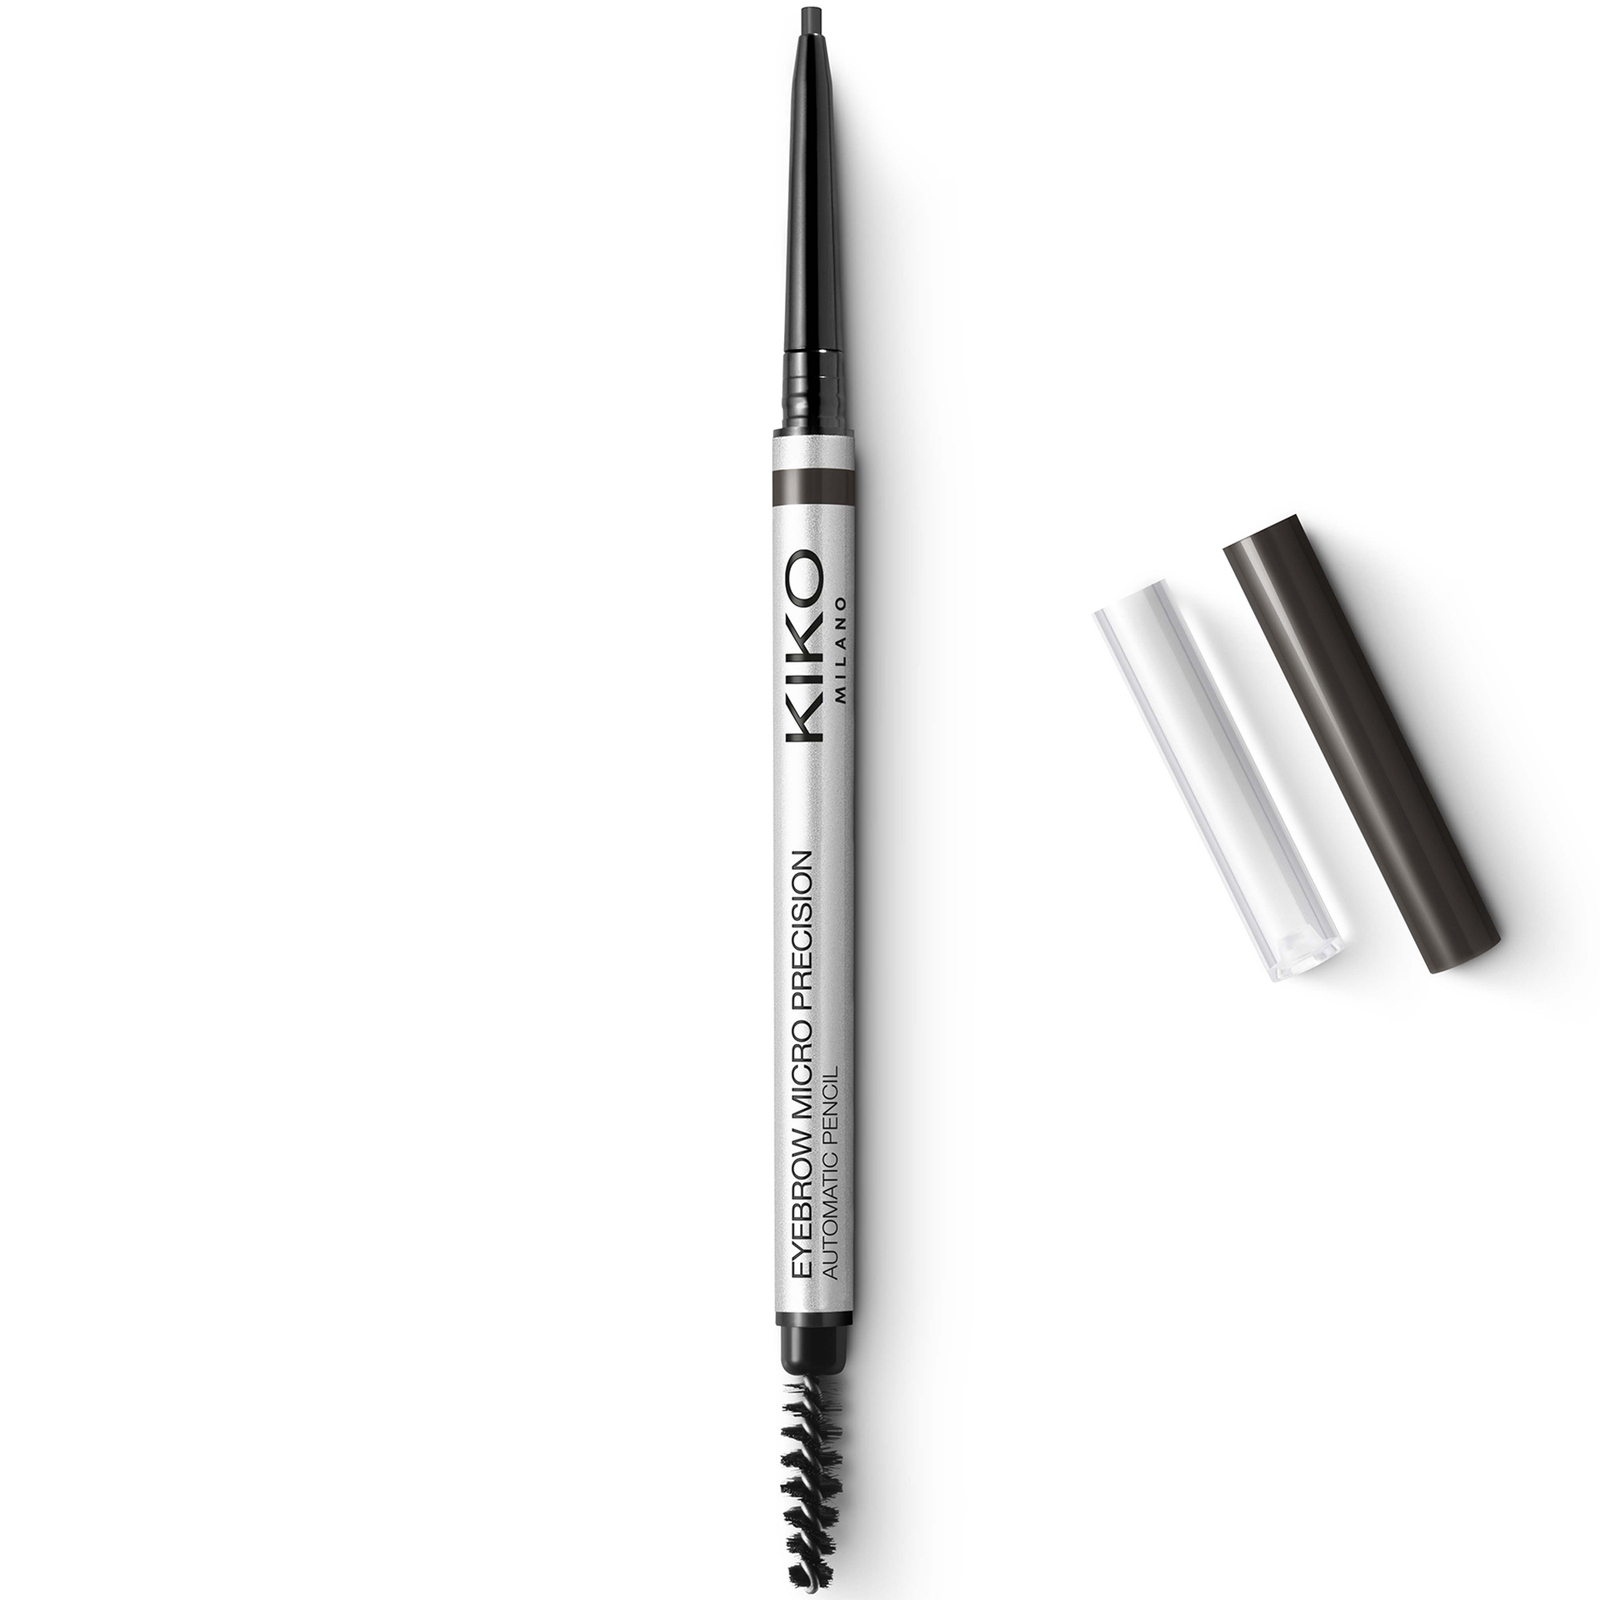 KIKO Milano Micro Precision Eyebrow Pencil 0.05g (Various Shades) - 06 Black